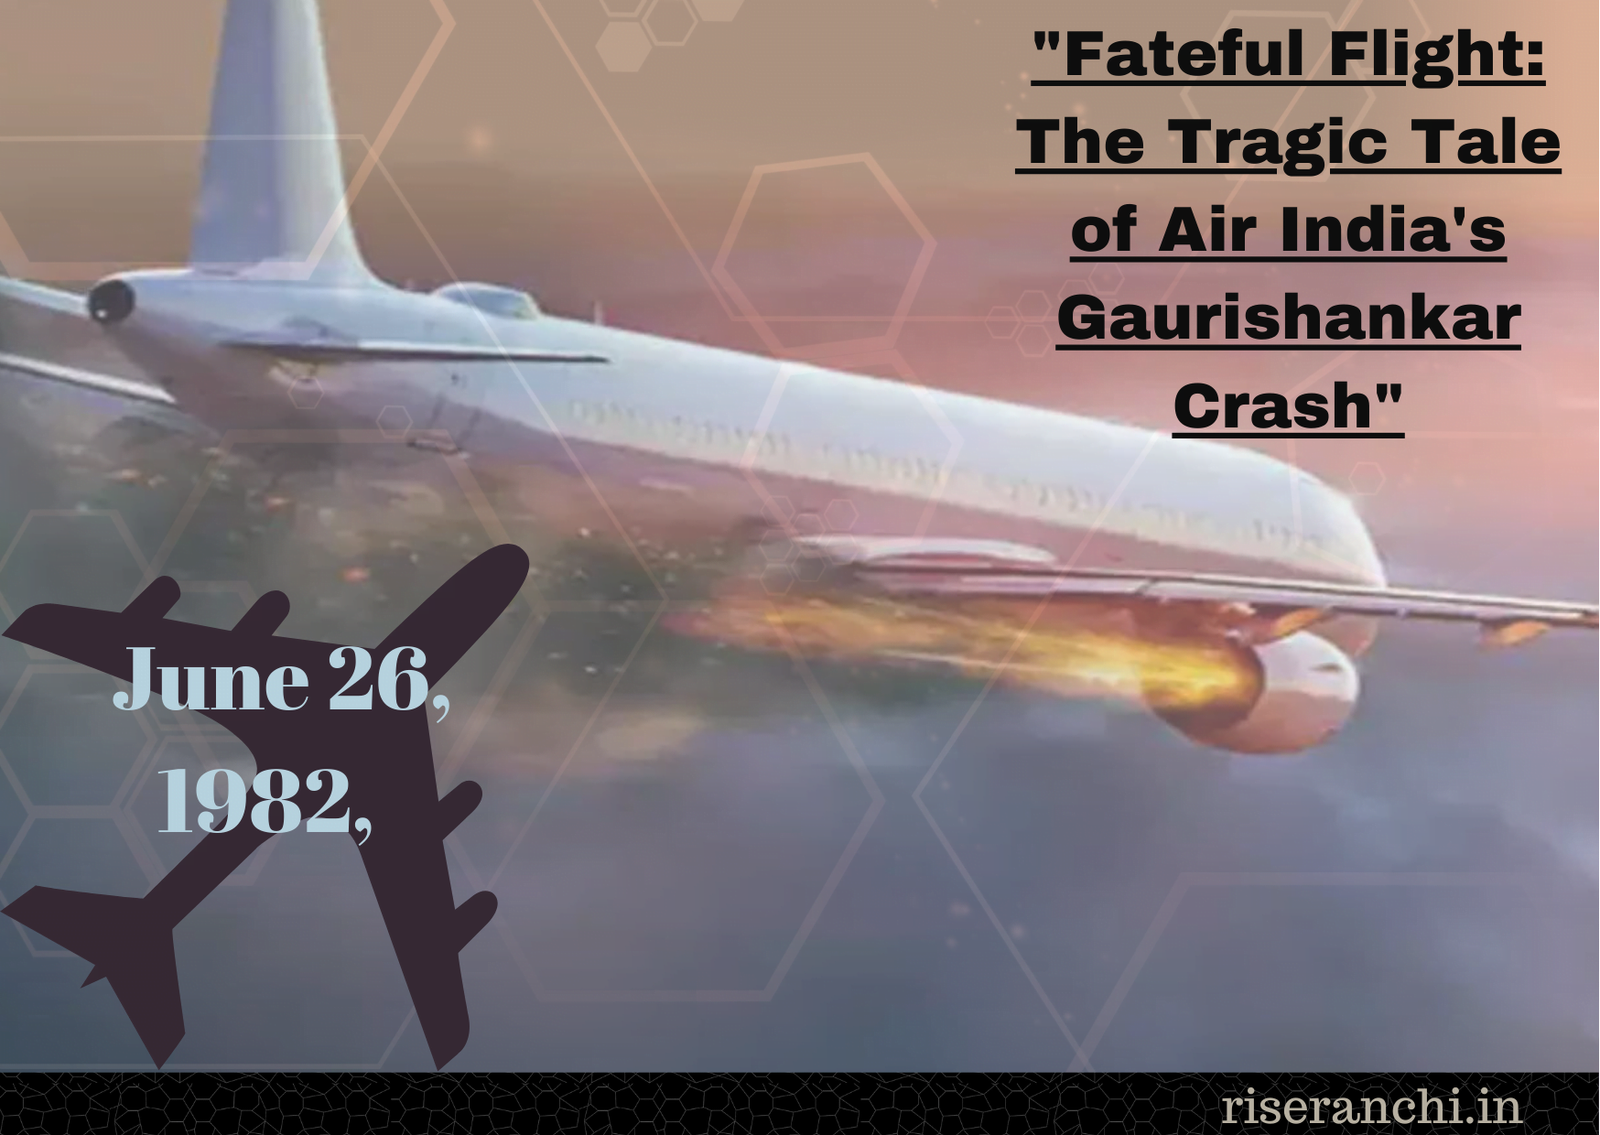 "Fateful Flight: The Tragic Tale of Air India's Gaurishankar Crash"